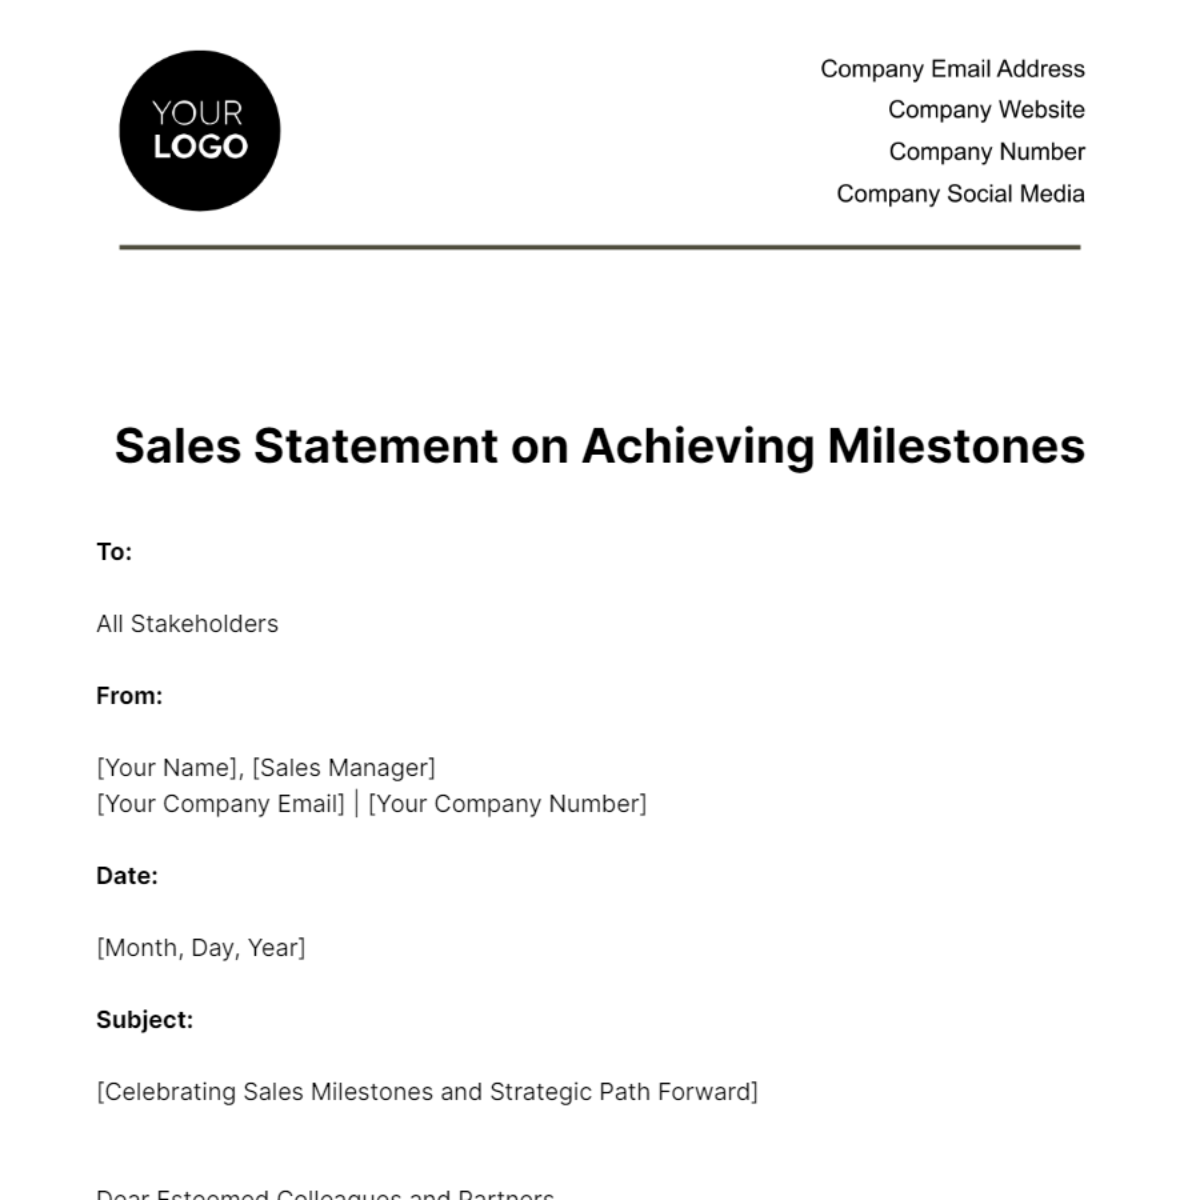 Free Sales Statement on Achieving Milestones Template